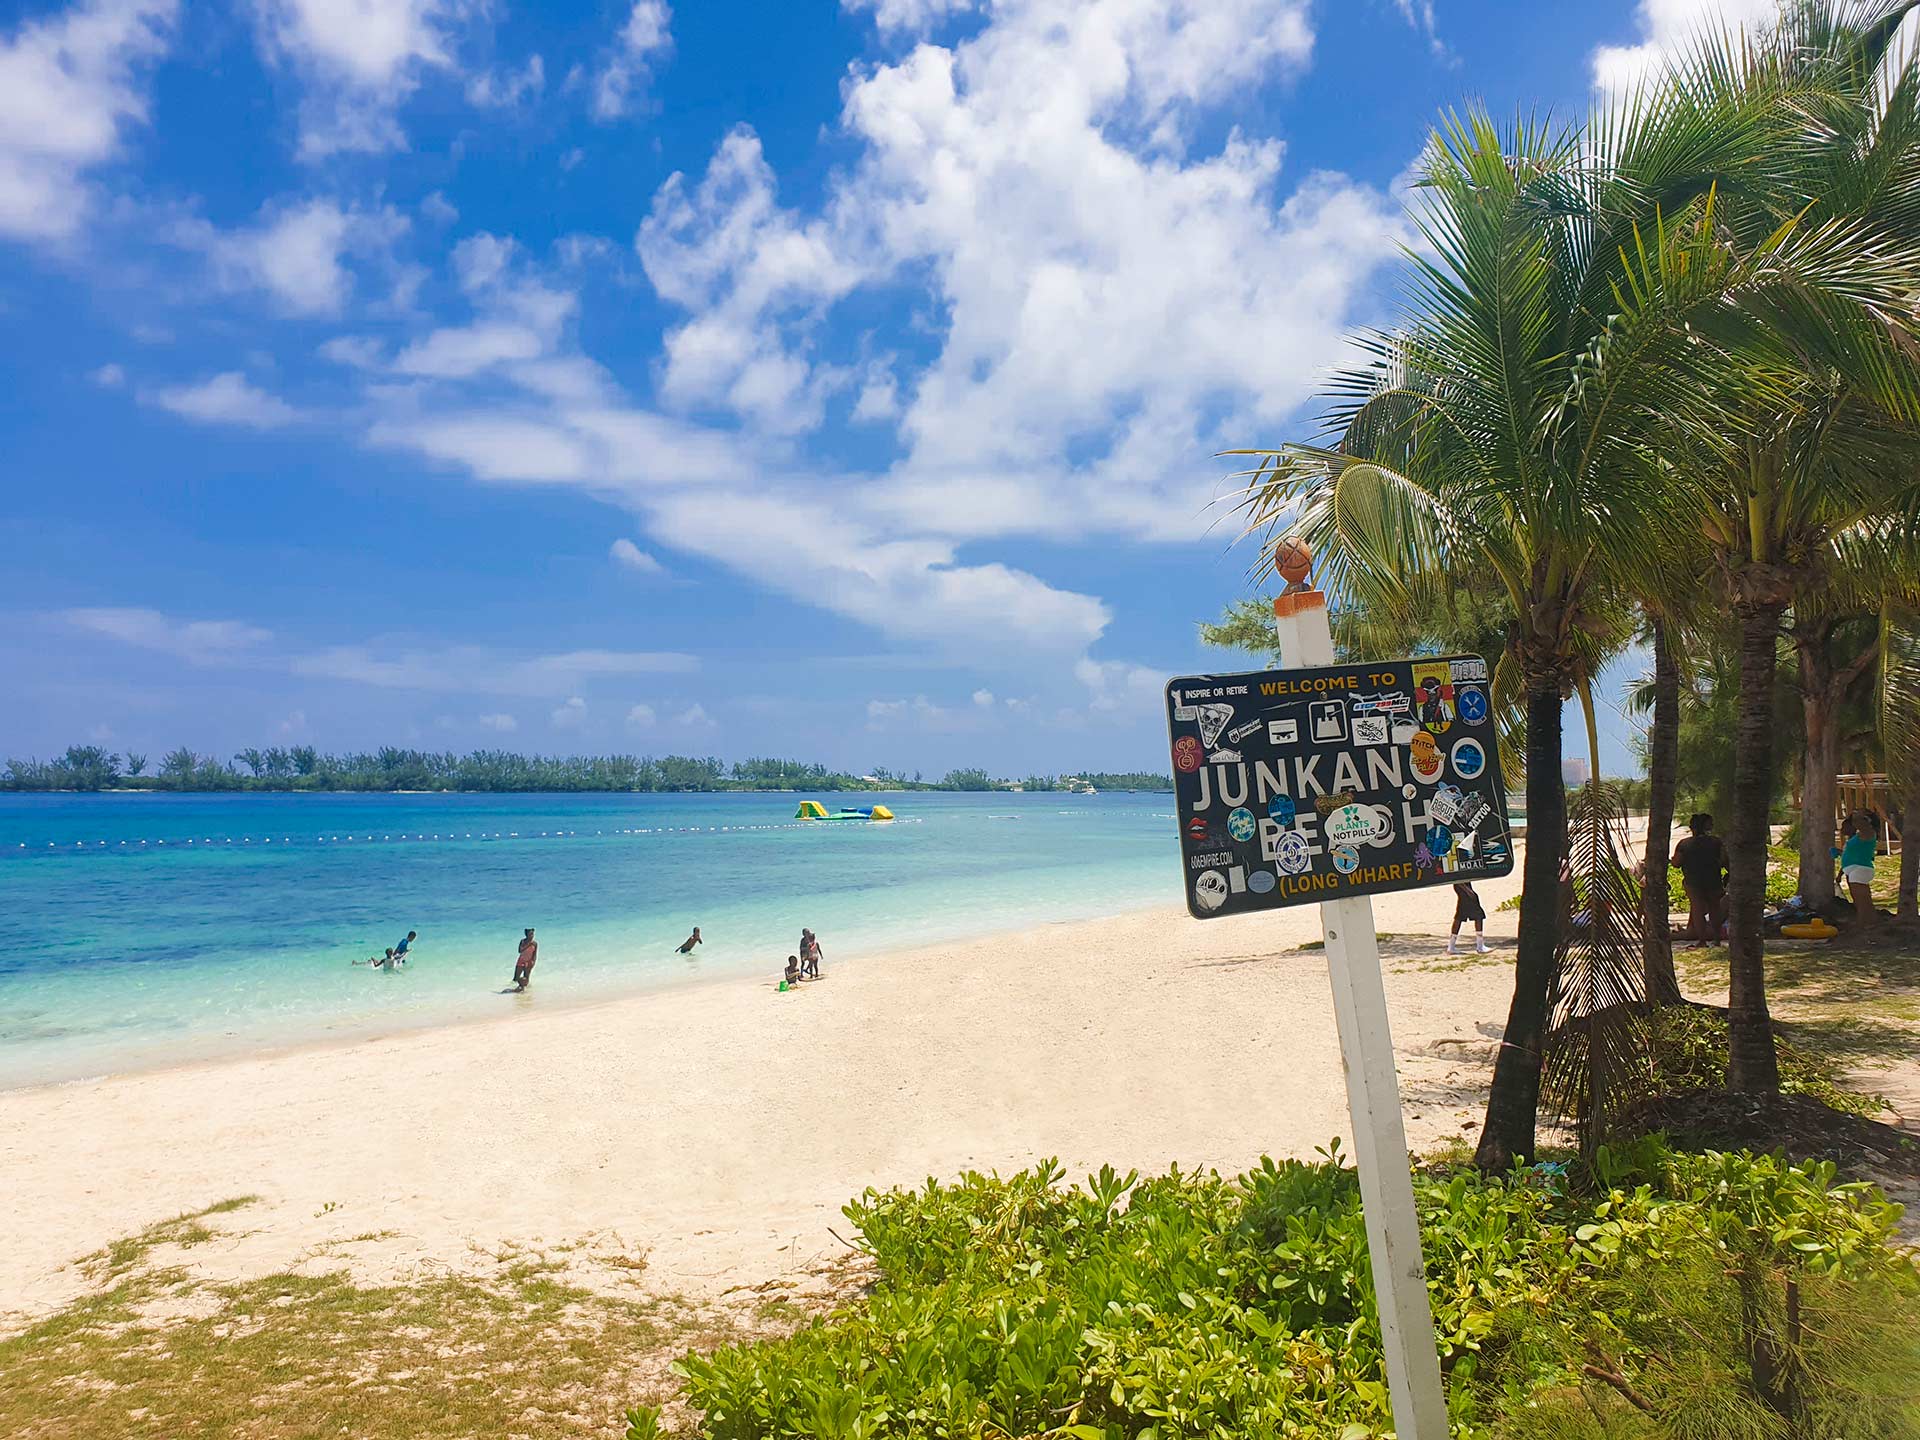 nassau bahamas public beaches